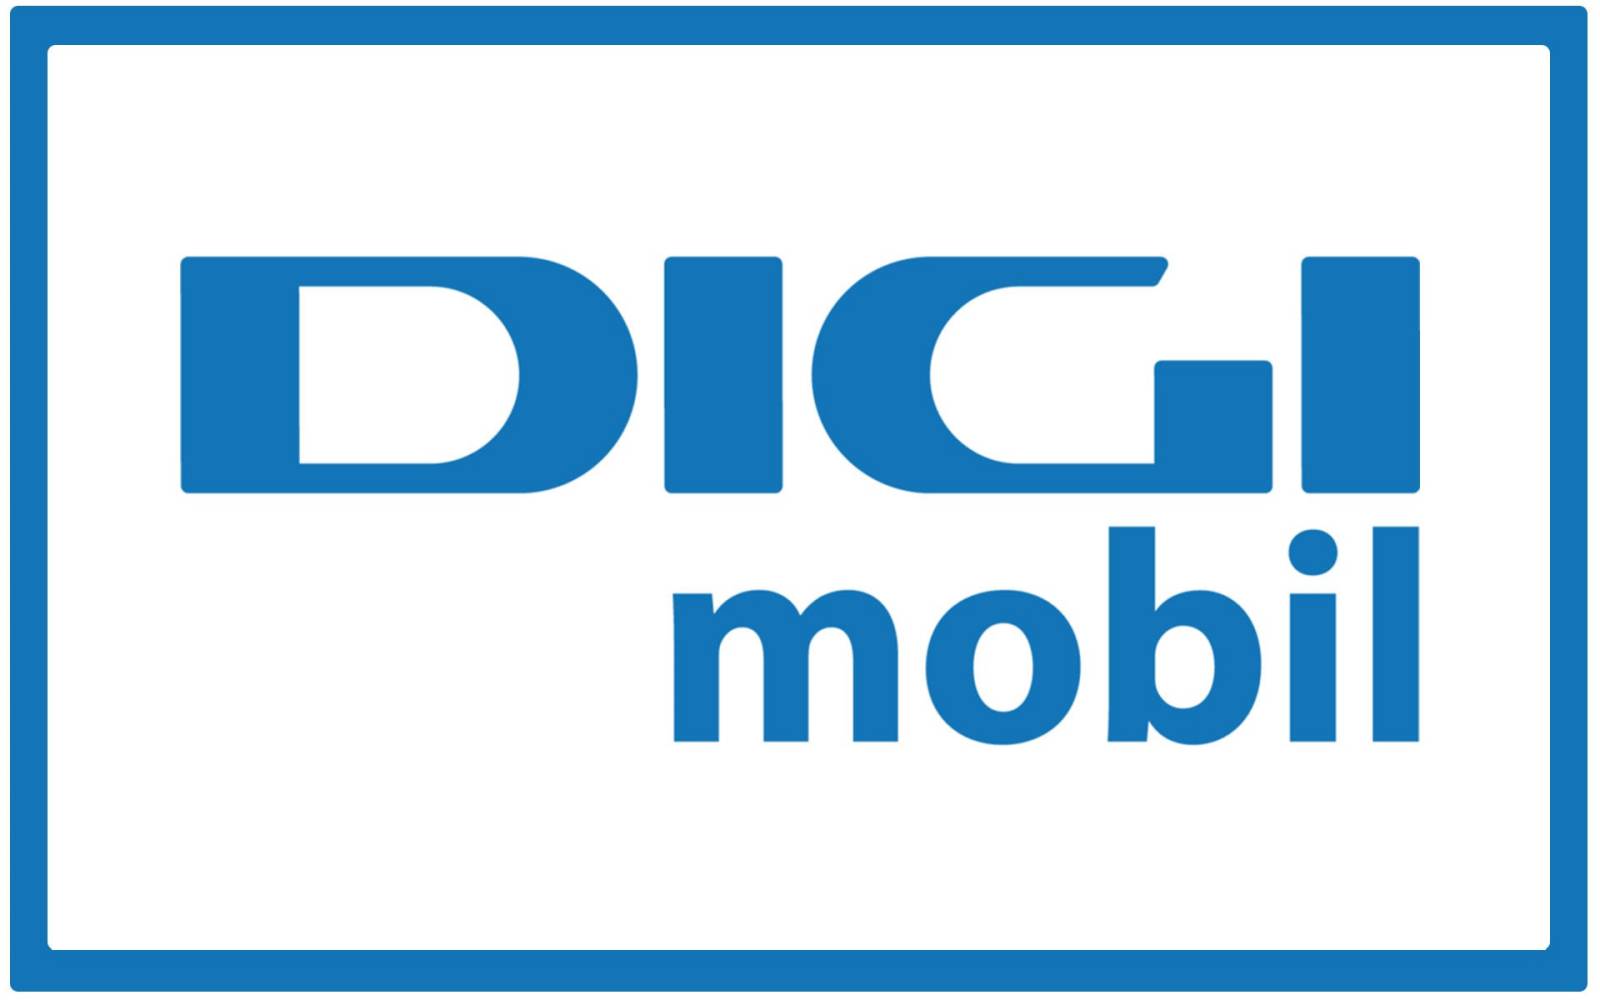 Digi Mobil RCS & RDS announcement